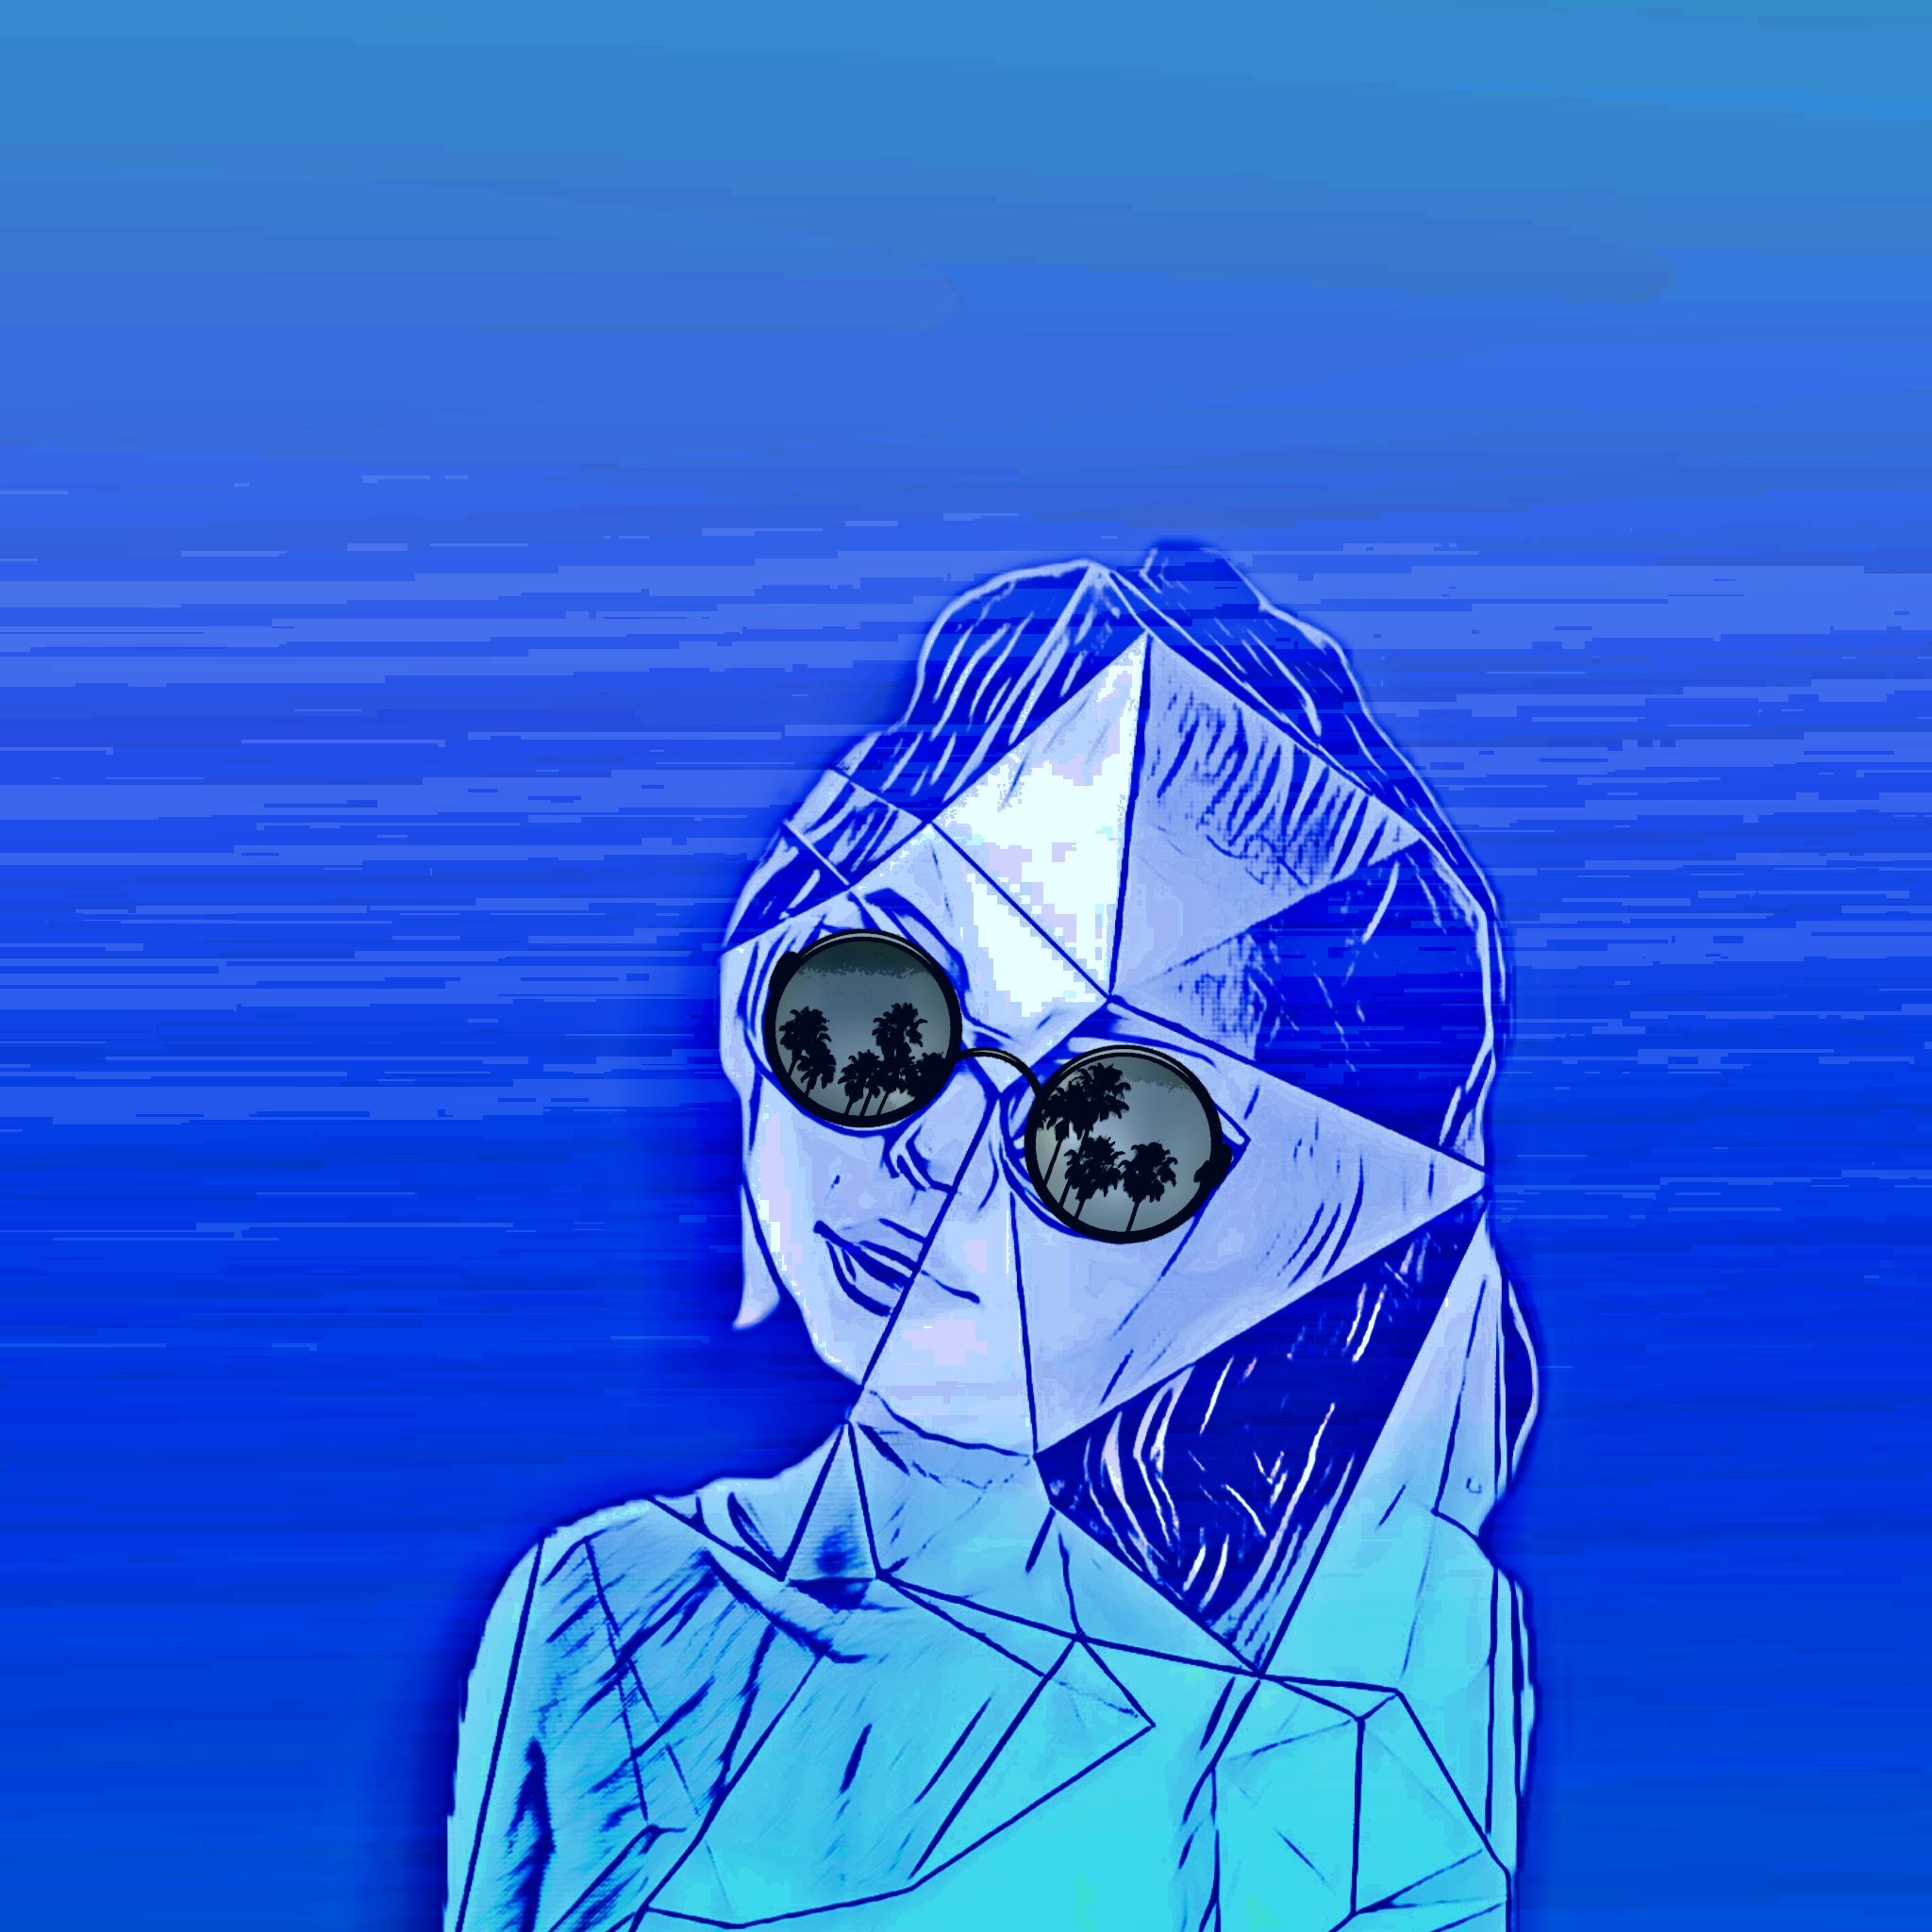 Animated girl face illustration